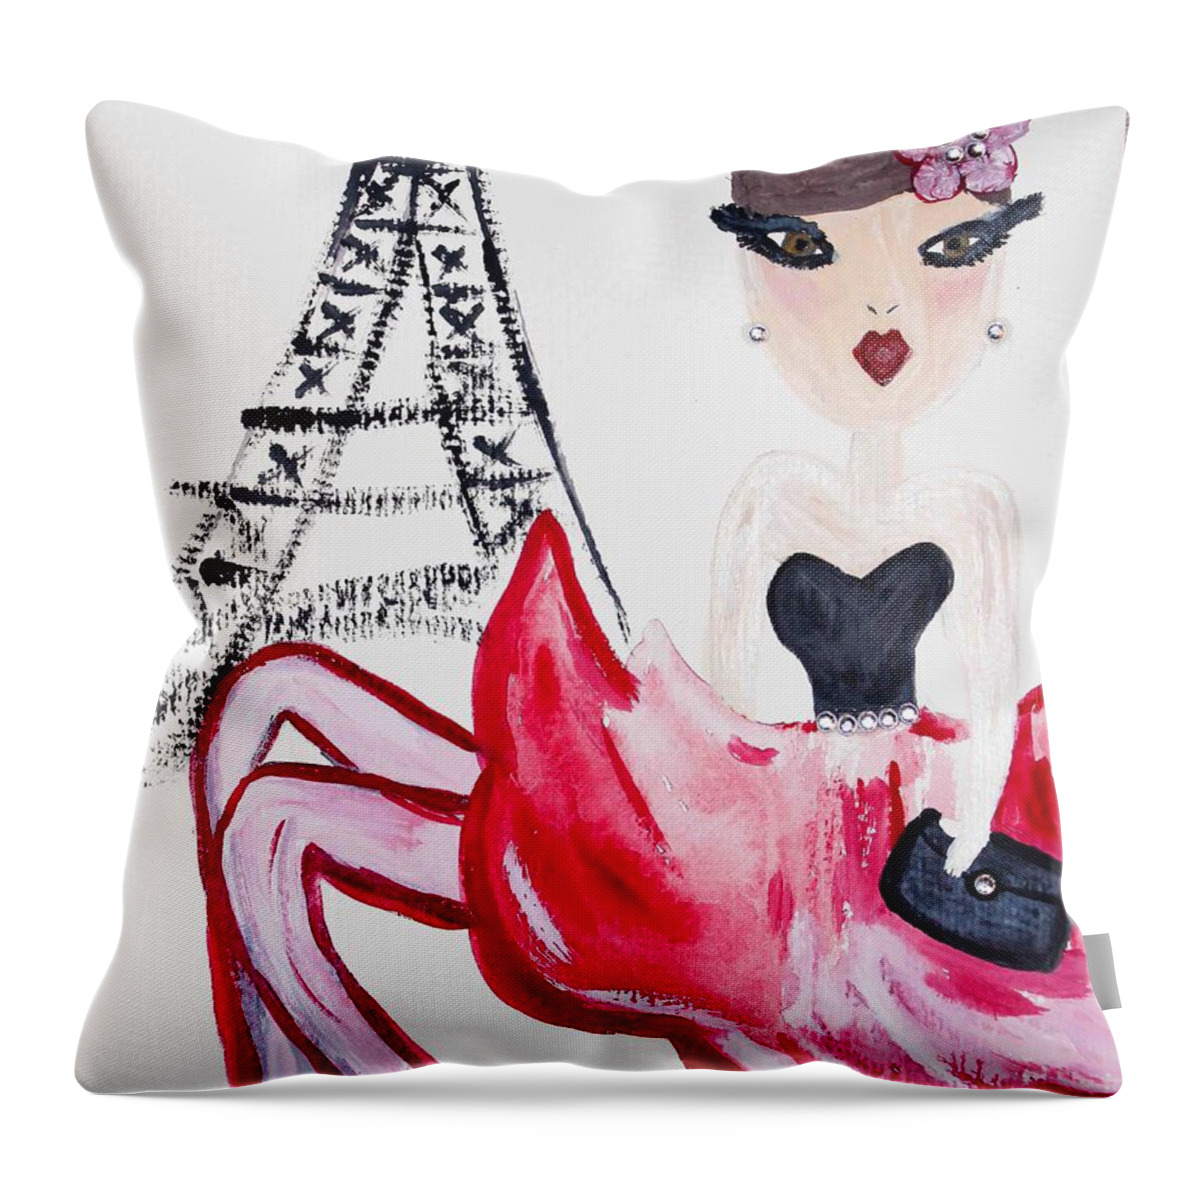 Art Throw Pillow featuring the mixed media A night in Paris by Artista Elisabet